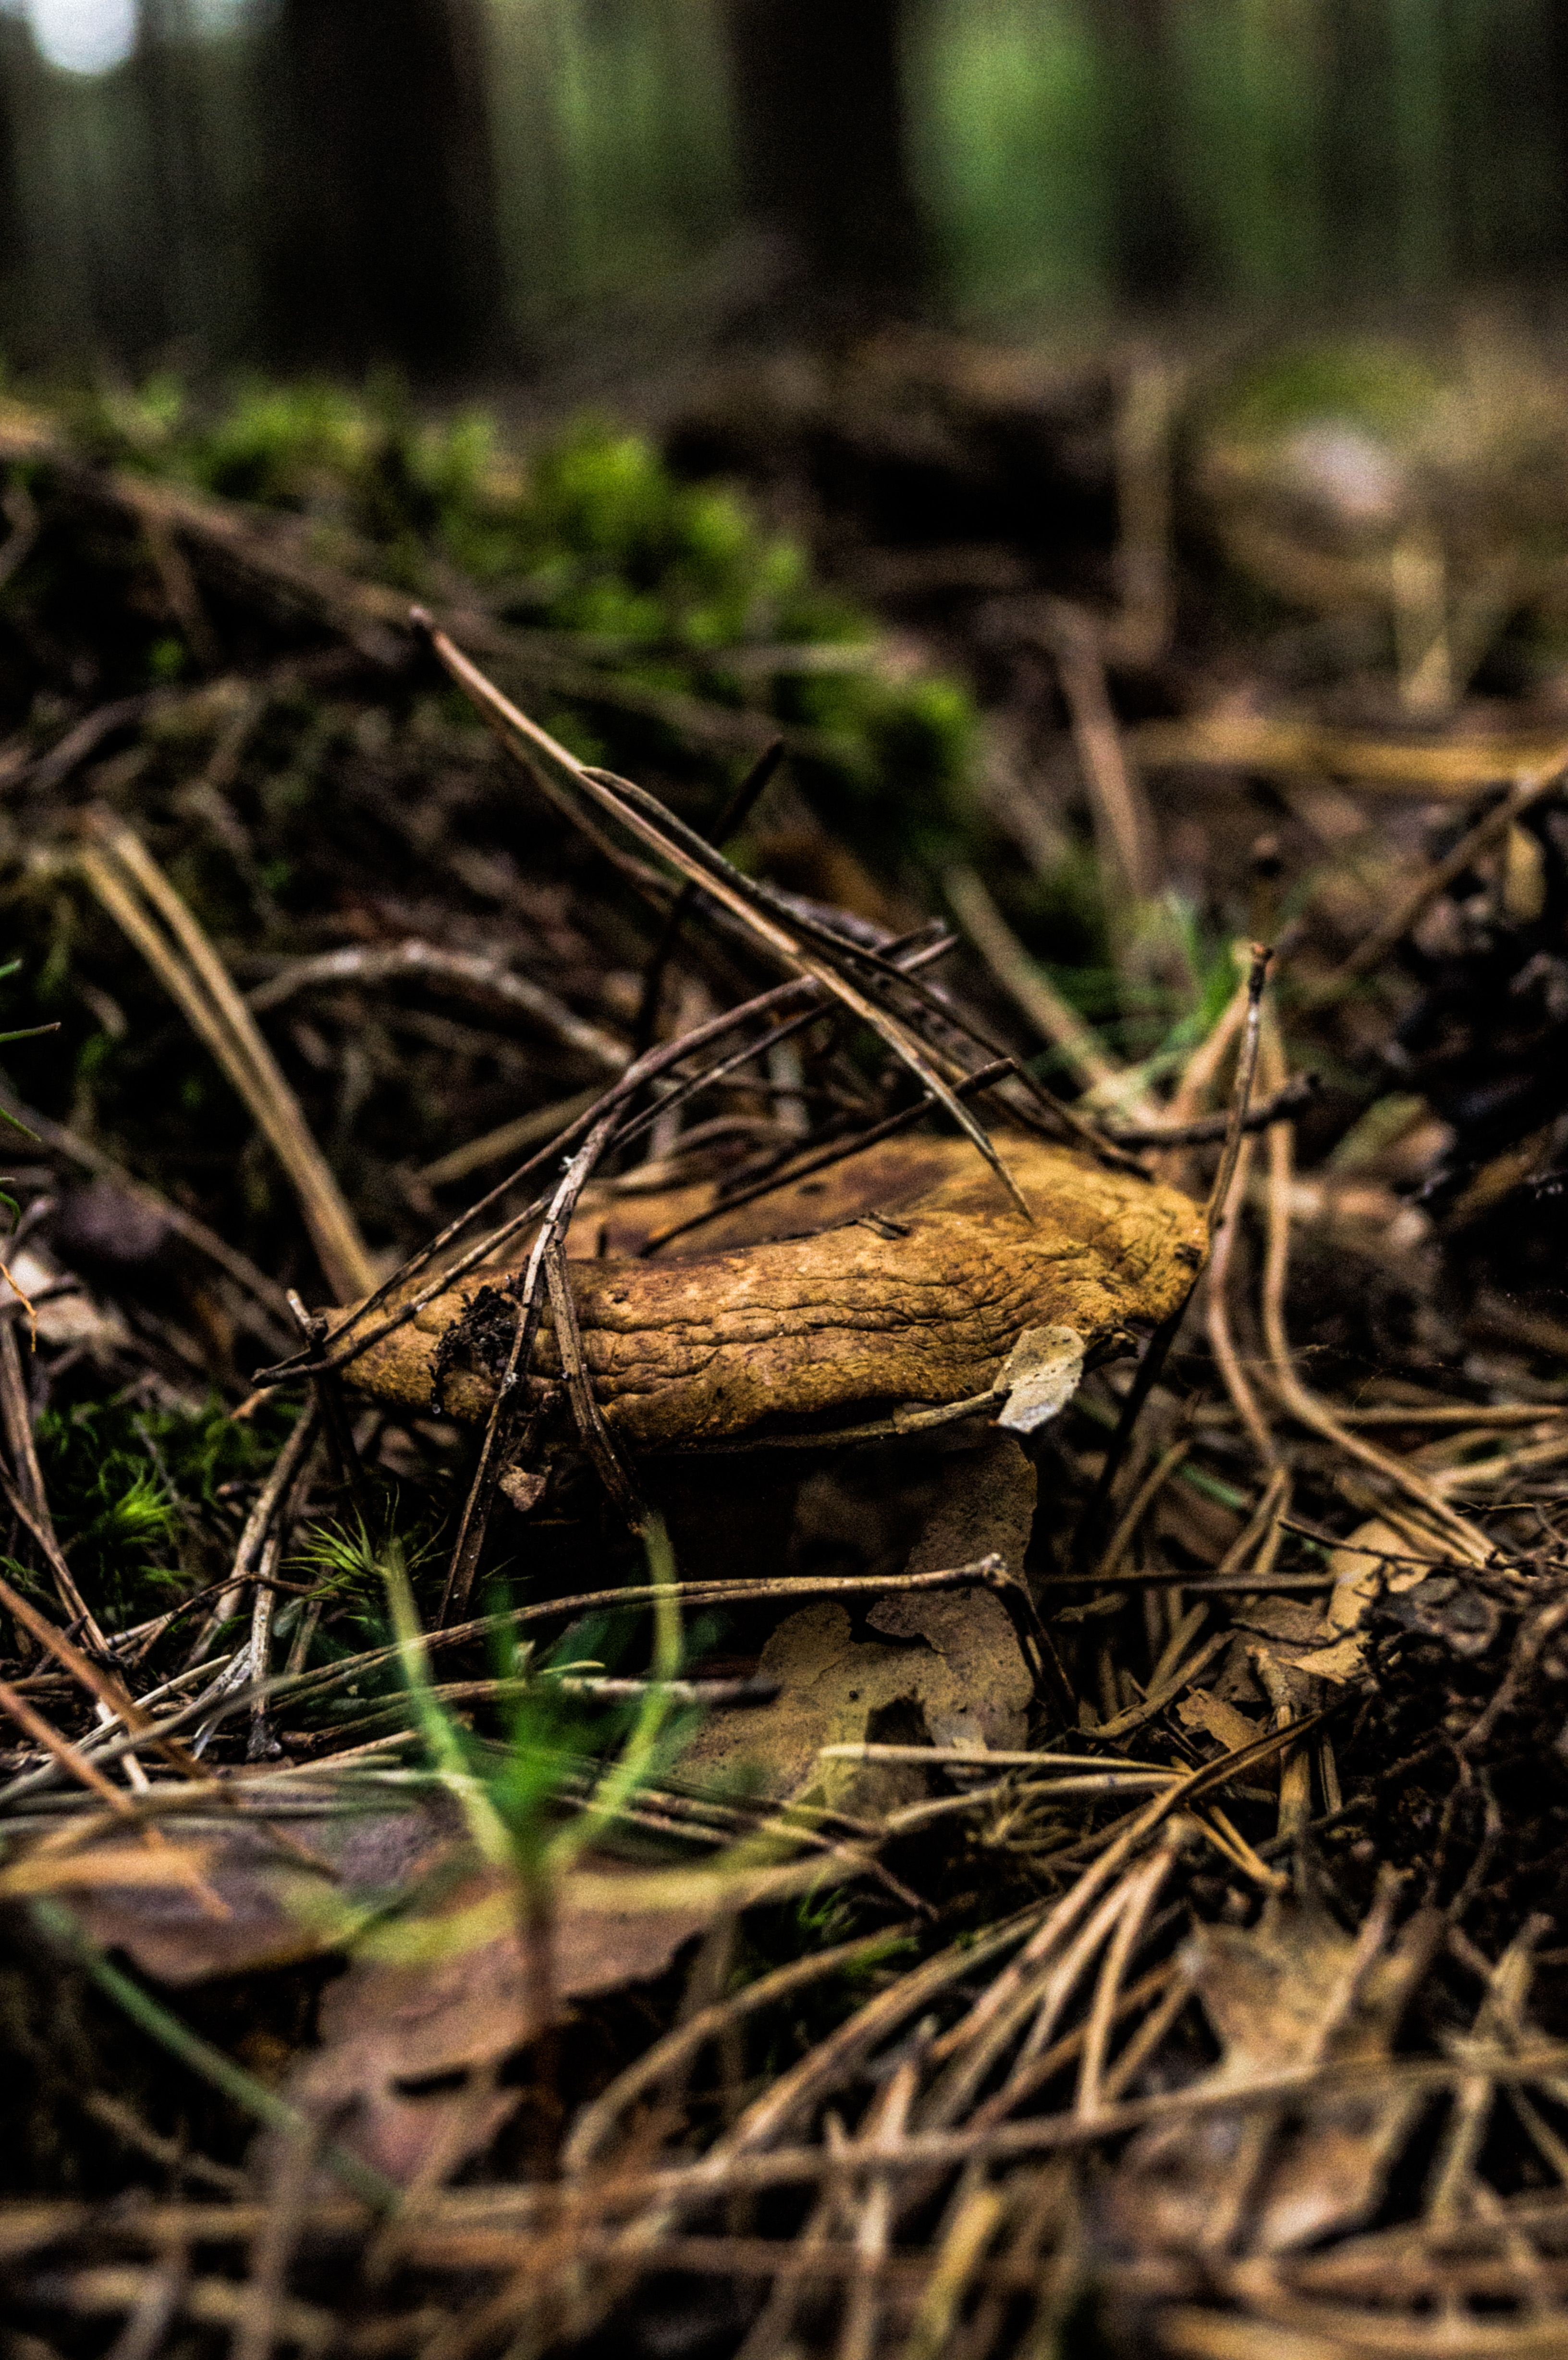 Mushroom by xkoko11